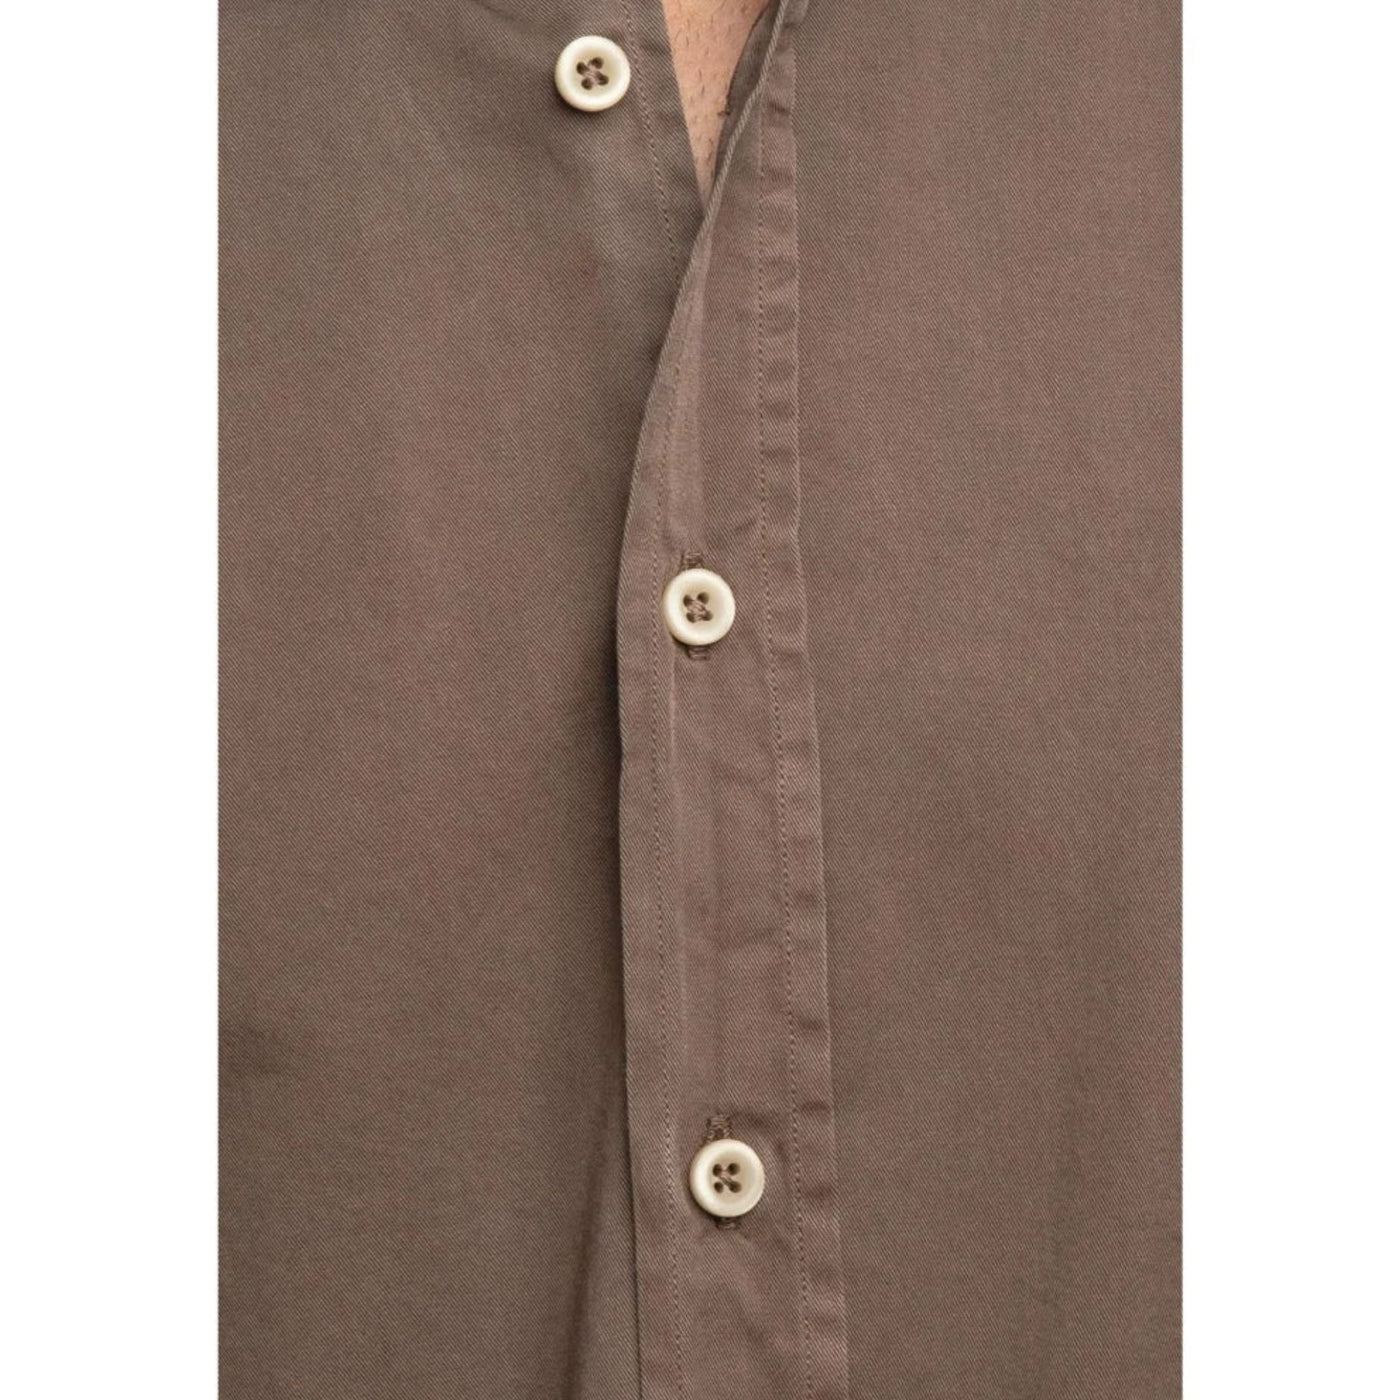 Men's shirt in brown cotton